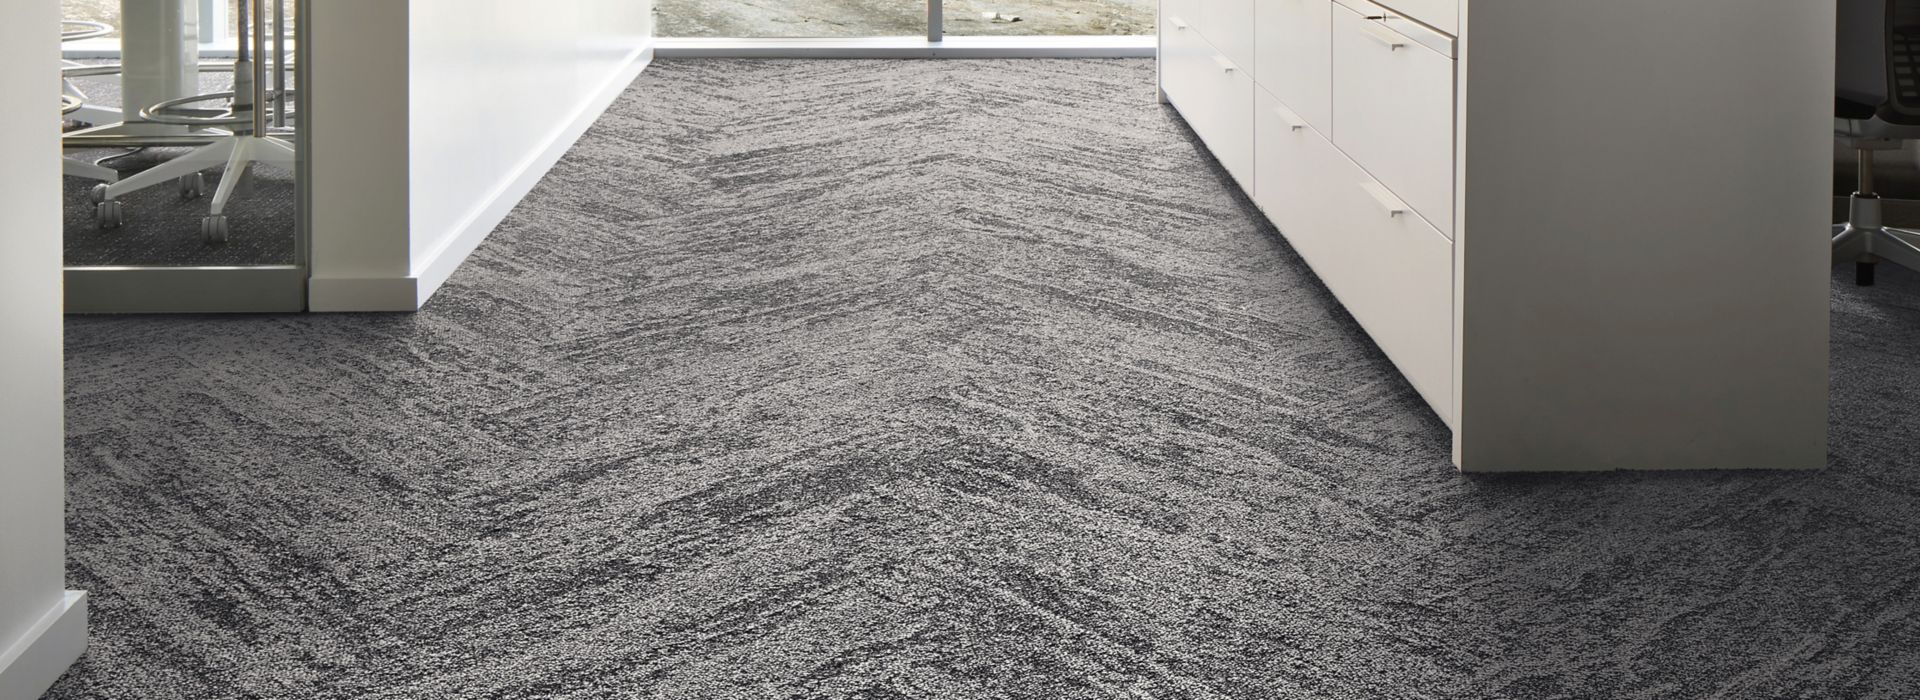 Interface Rock Springs plank carpet tile in walkway of office  imagen número 1